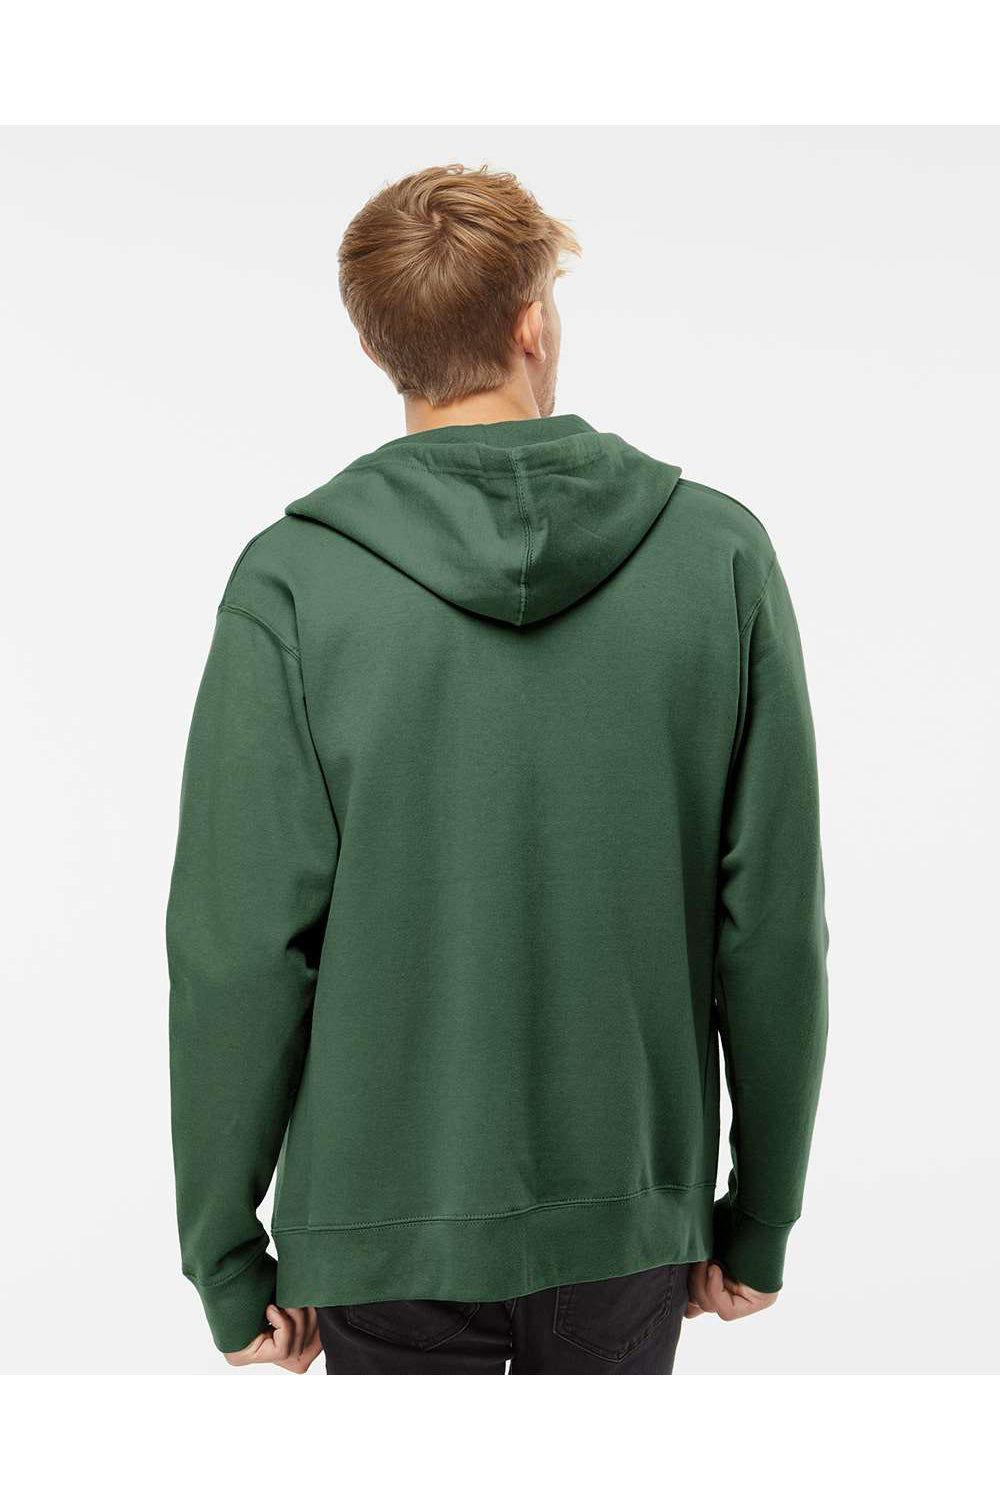 Independent Trading Co. SS4500Z Mens Full Zip Hooded Sweatshirt Hoodie Alpine Green Model Back